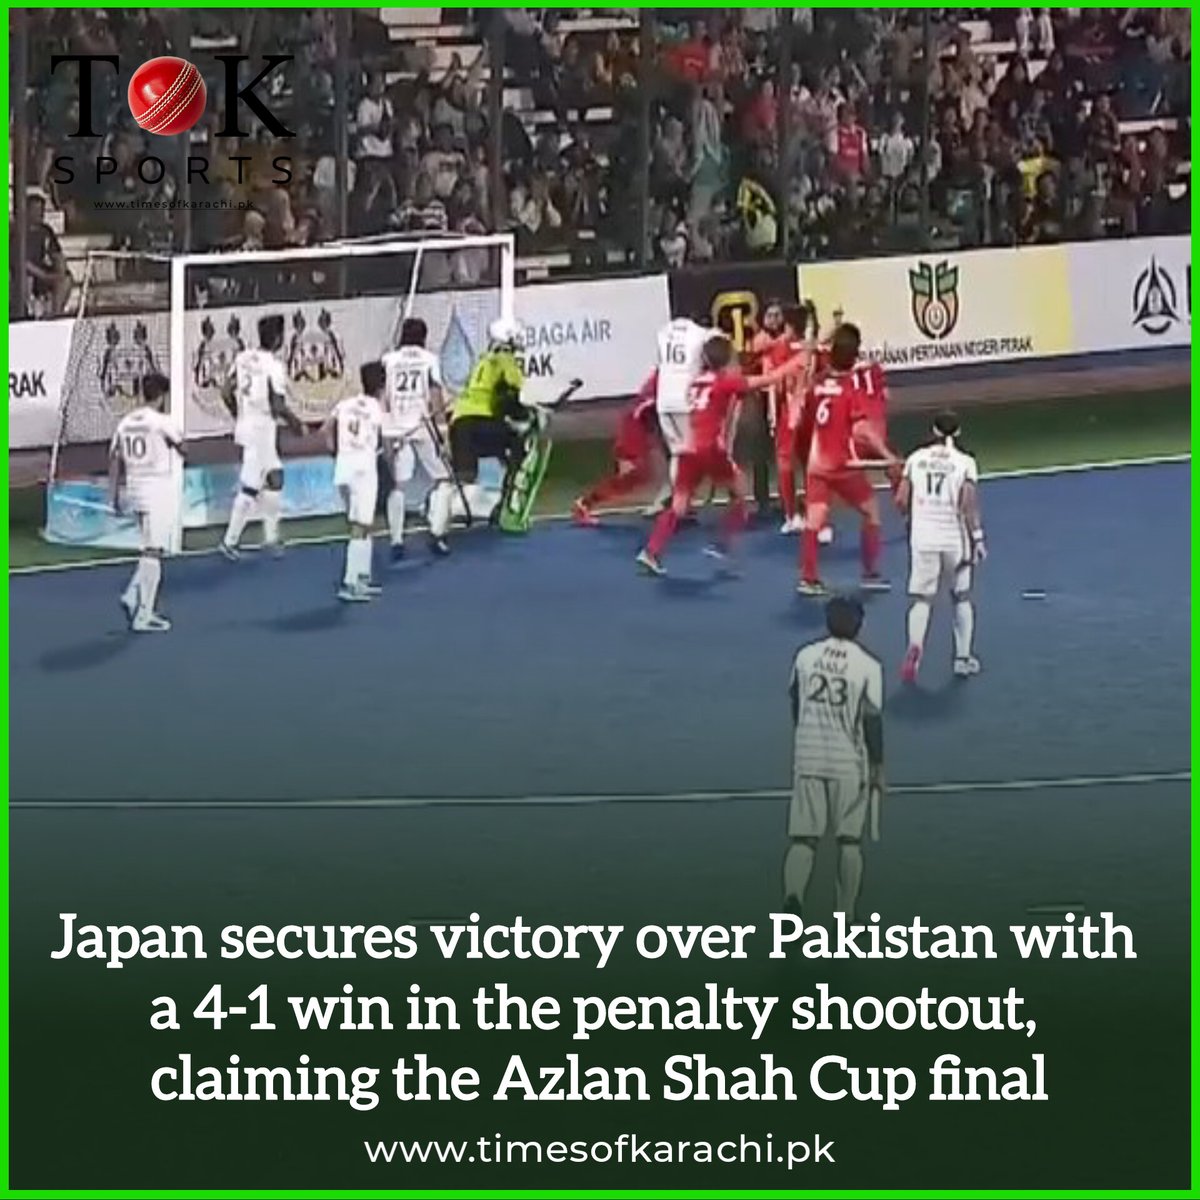 Japan clinches Azlan Shah Cup final 4-1 in penalty shootout victory Over Pakistan #TOKSports #PakvJap #AzlanShahCupFinal